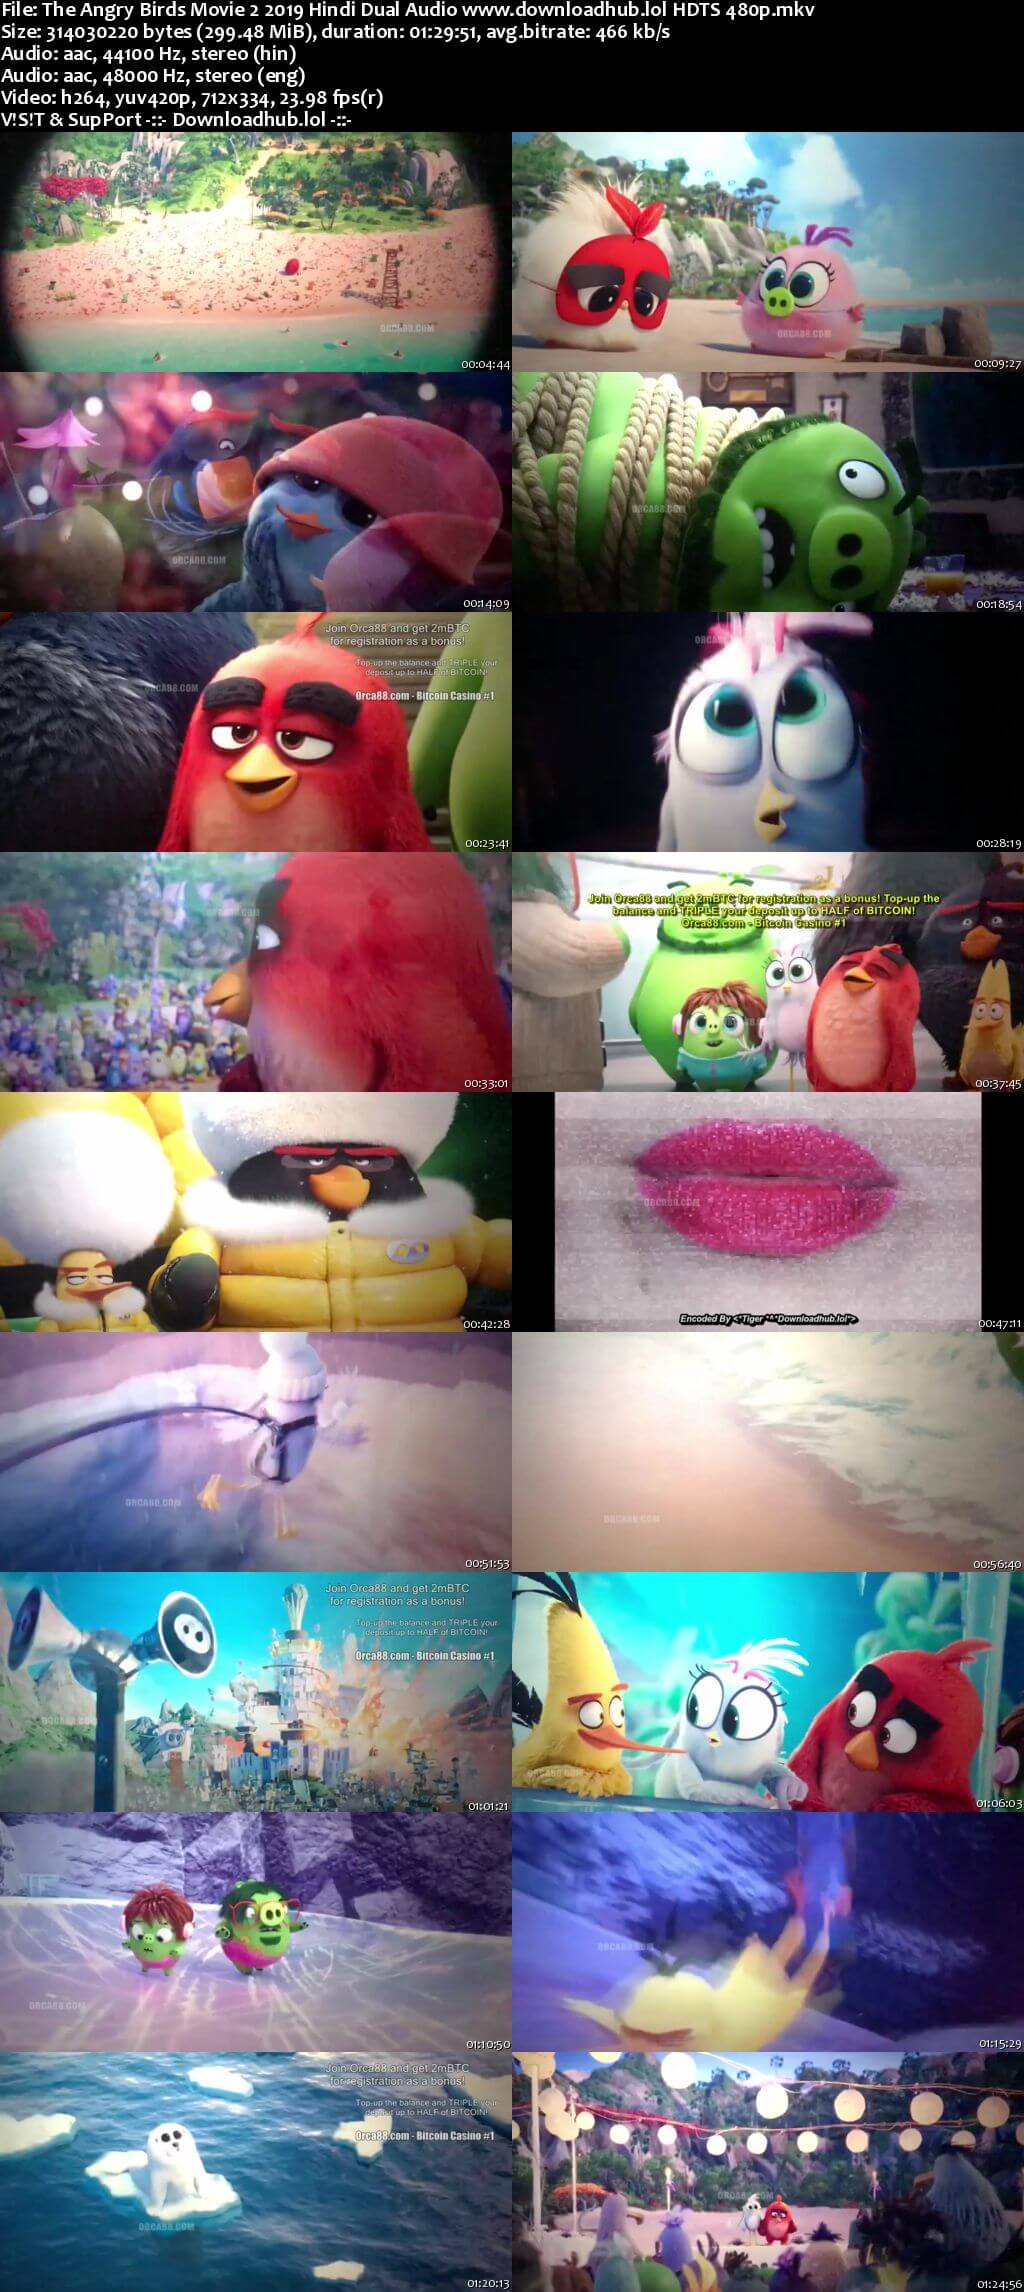 The Angry Birds Movie 2 2019 Hindi Dual Audio 300MB HDTS 480p | Downloadhub